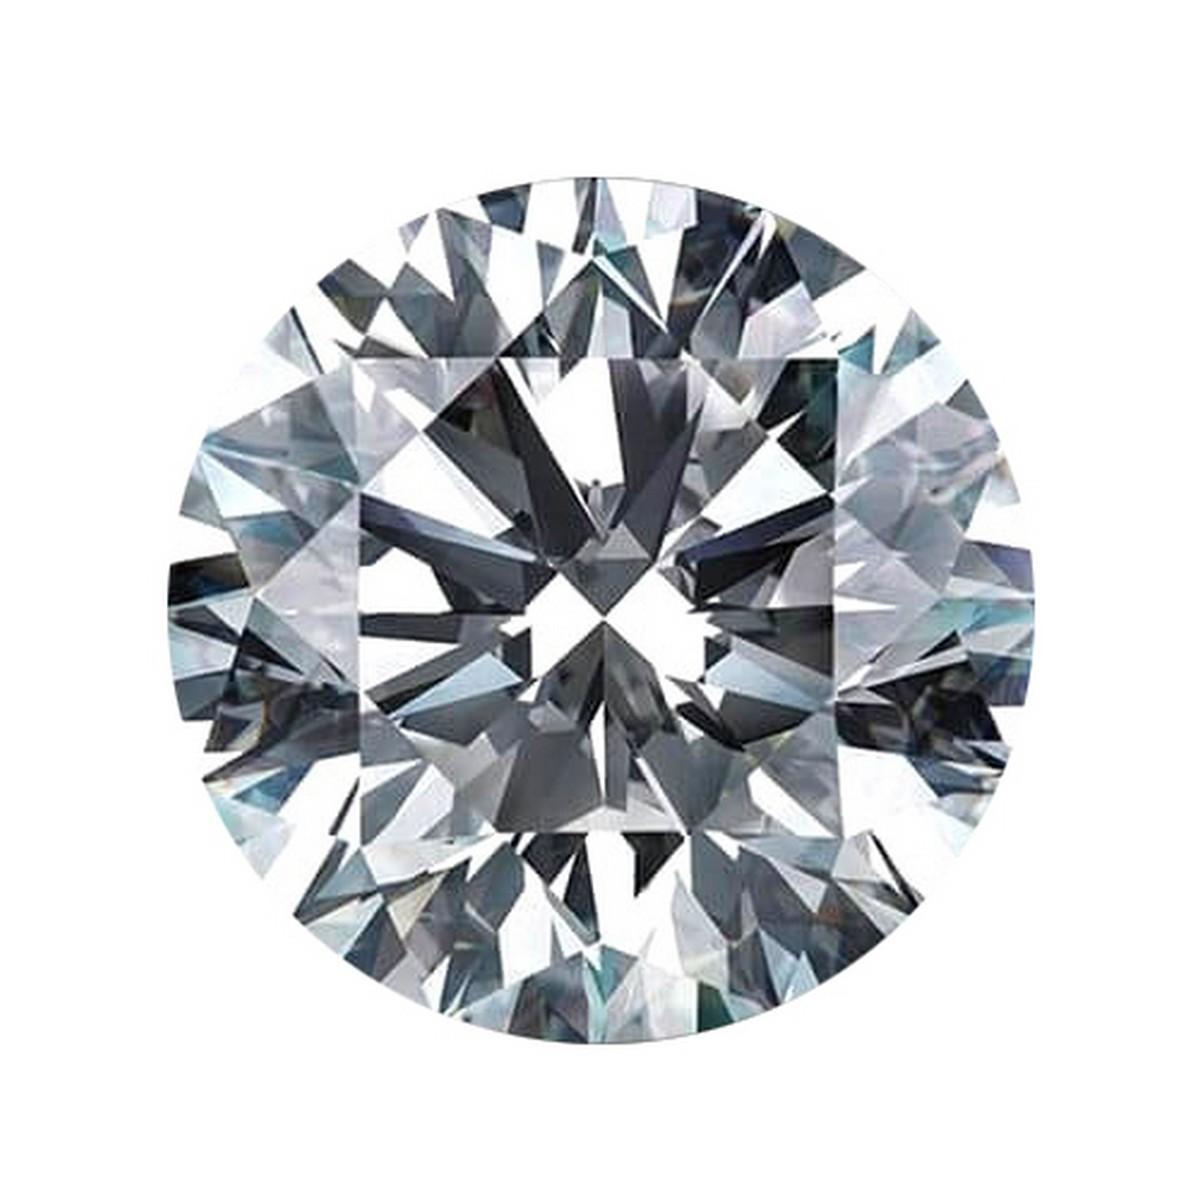 1.18 ctw. VVS2 IGI Certified Round Brilliant Cut Loose Diamond (LAB GROWN)